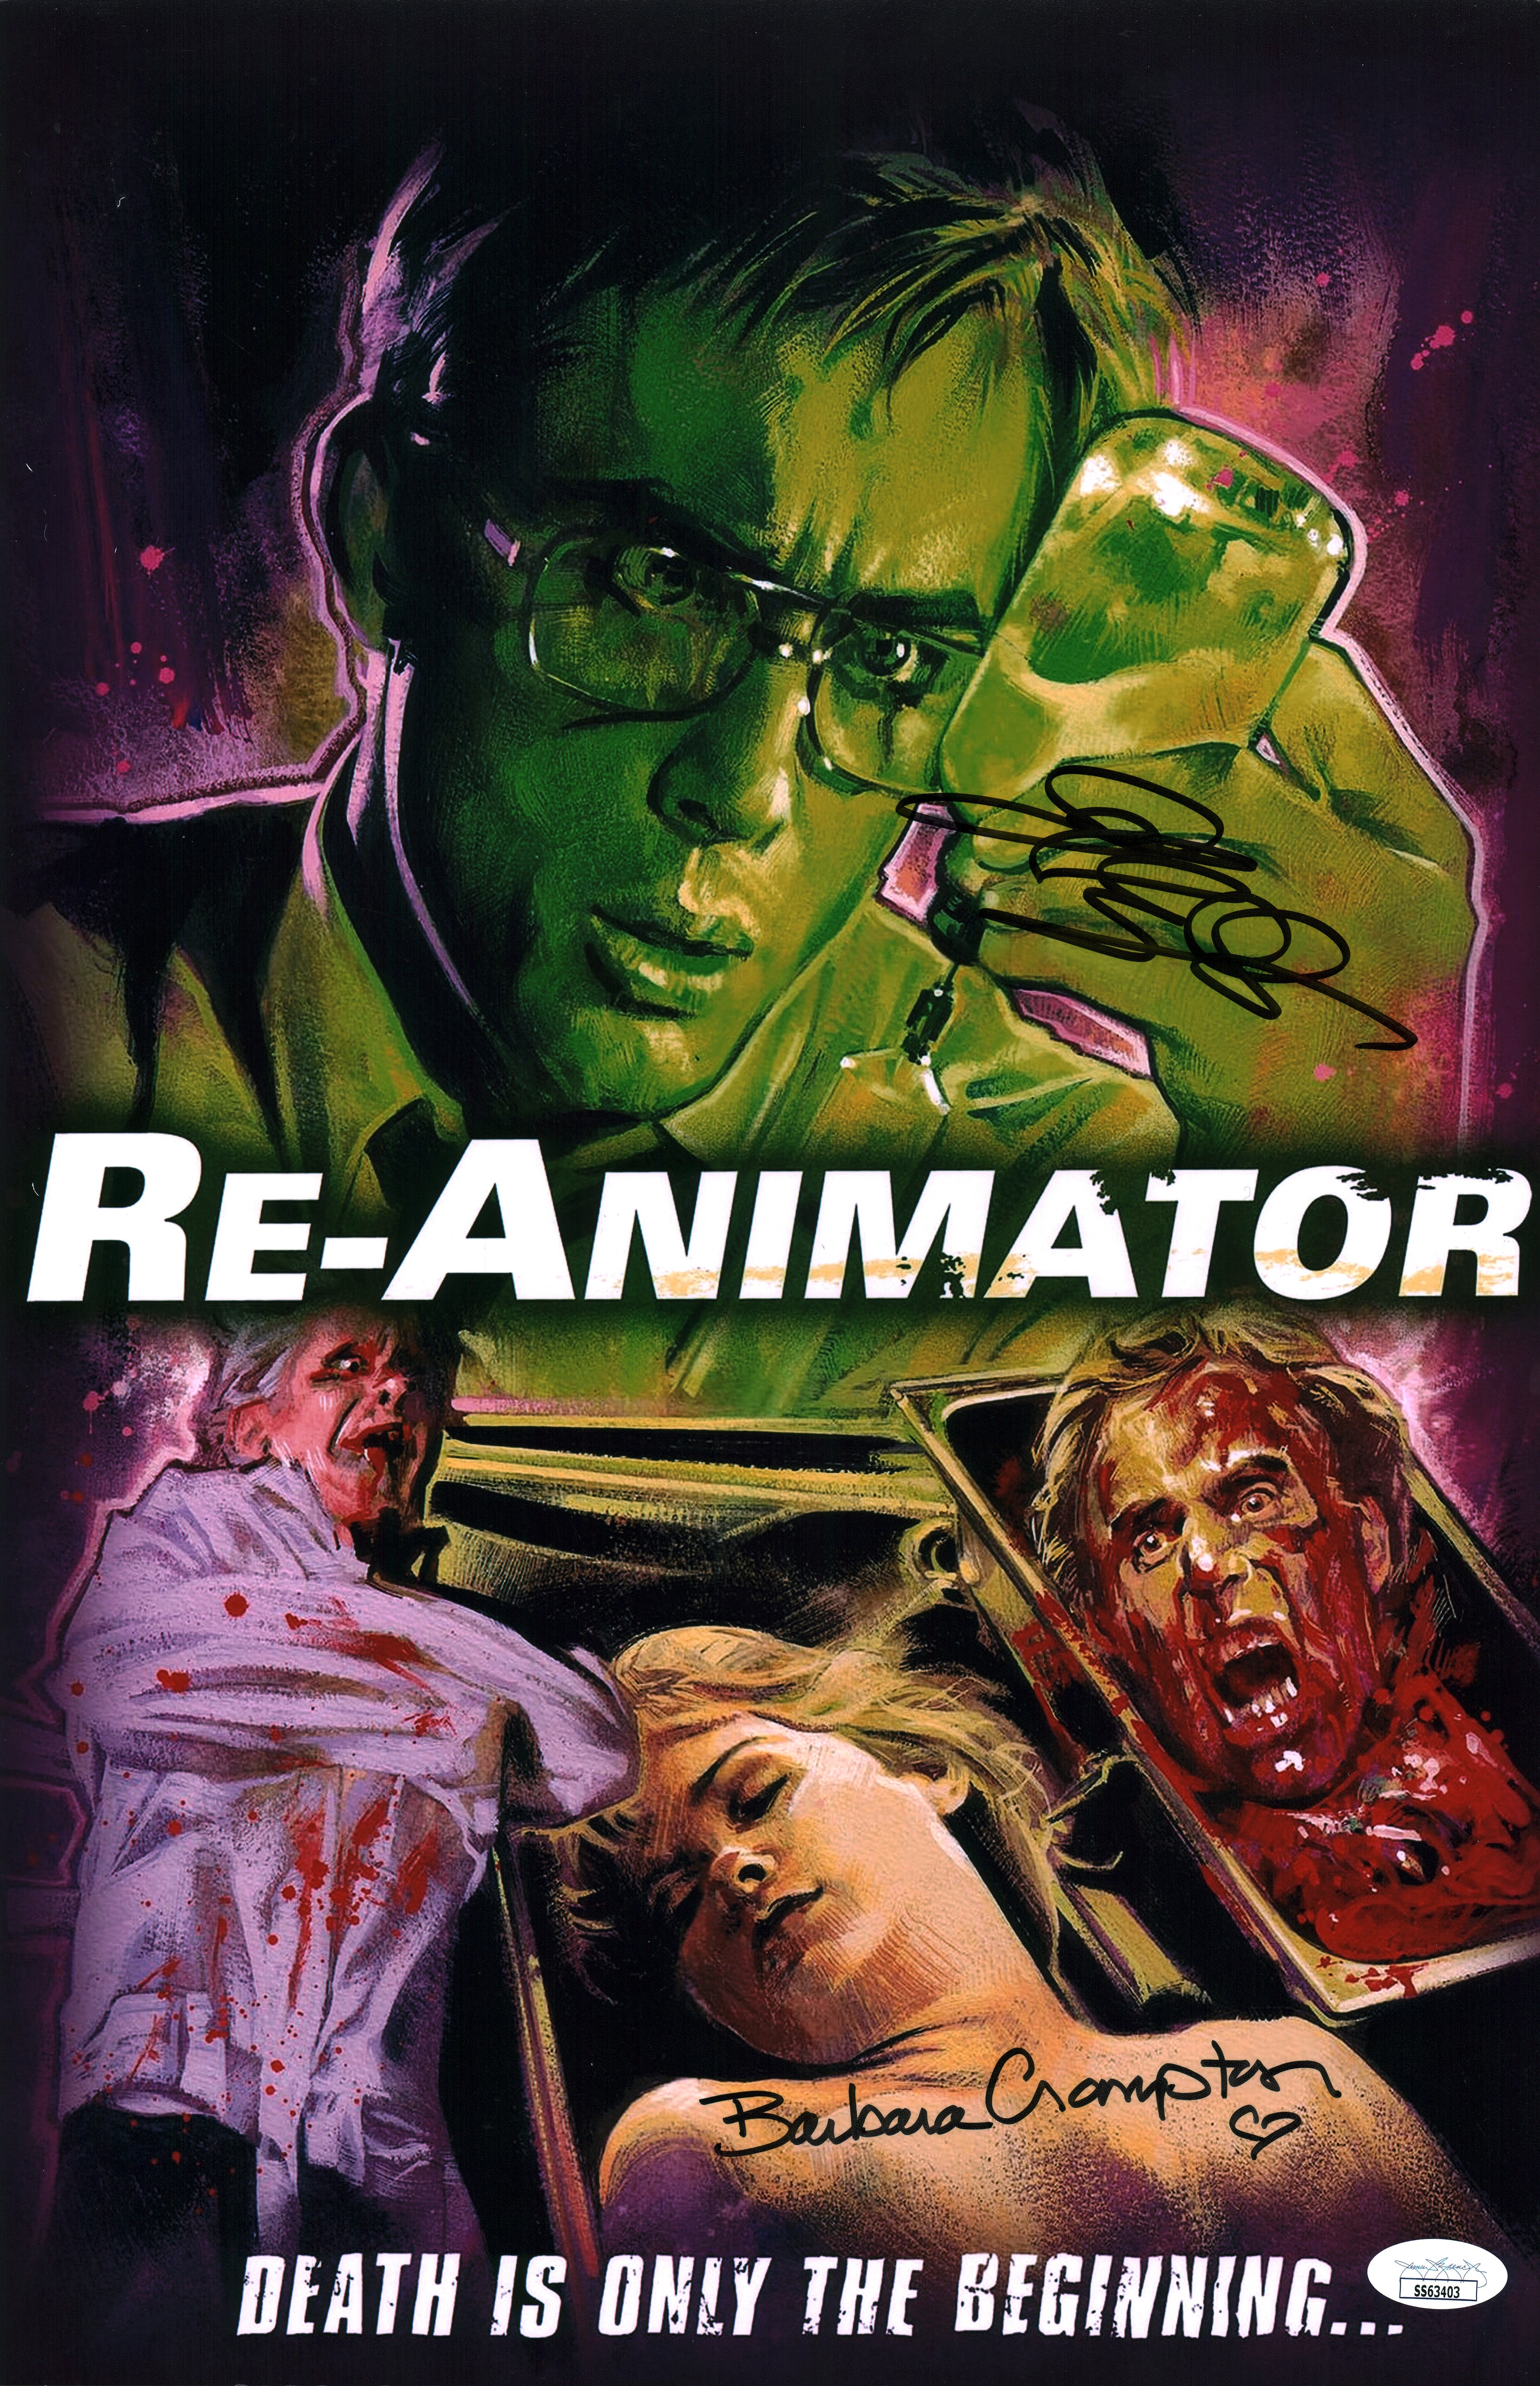 Re-Animator 11x17 Signed Mini Poster Combs Crampton JSA Certified Autograph